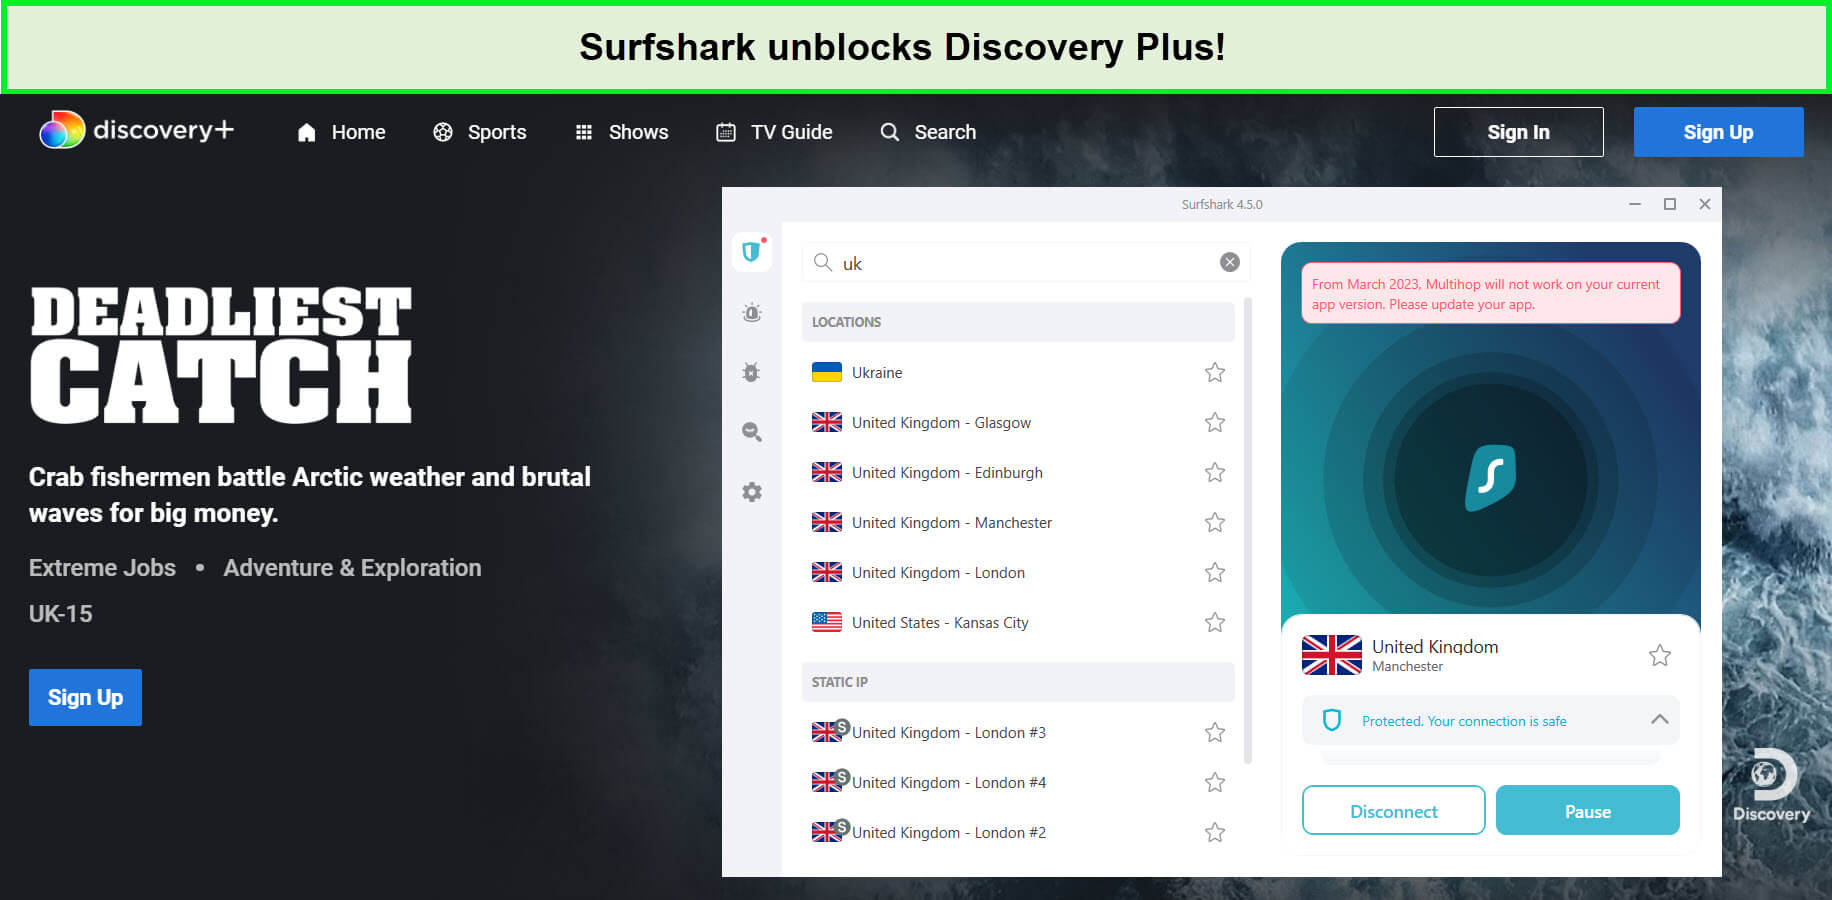 surfshark-unblocks-discovery-plus-outside-uk